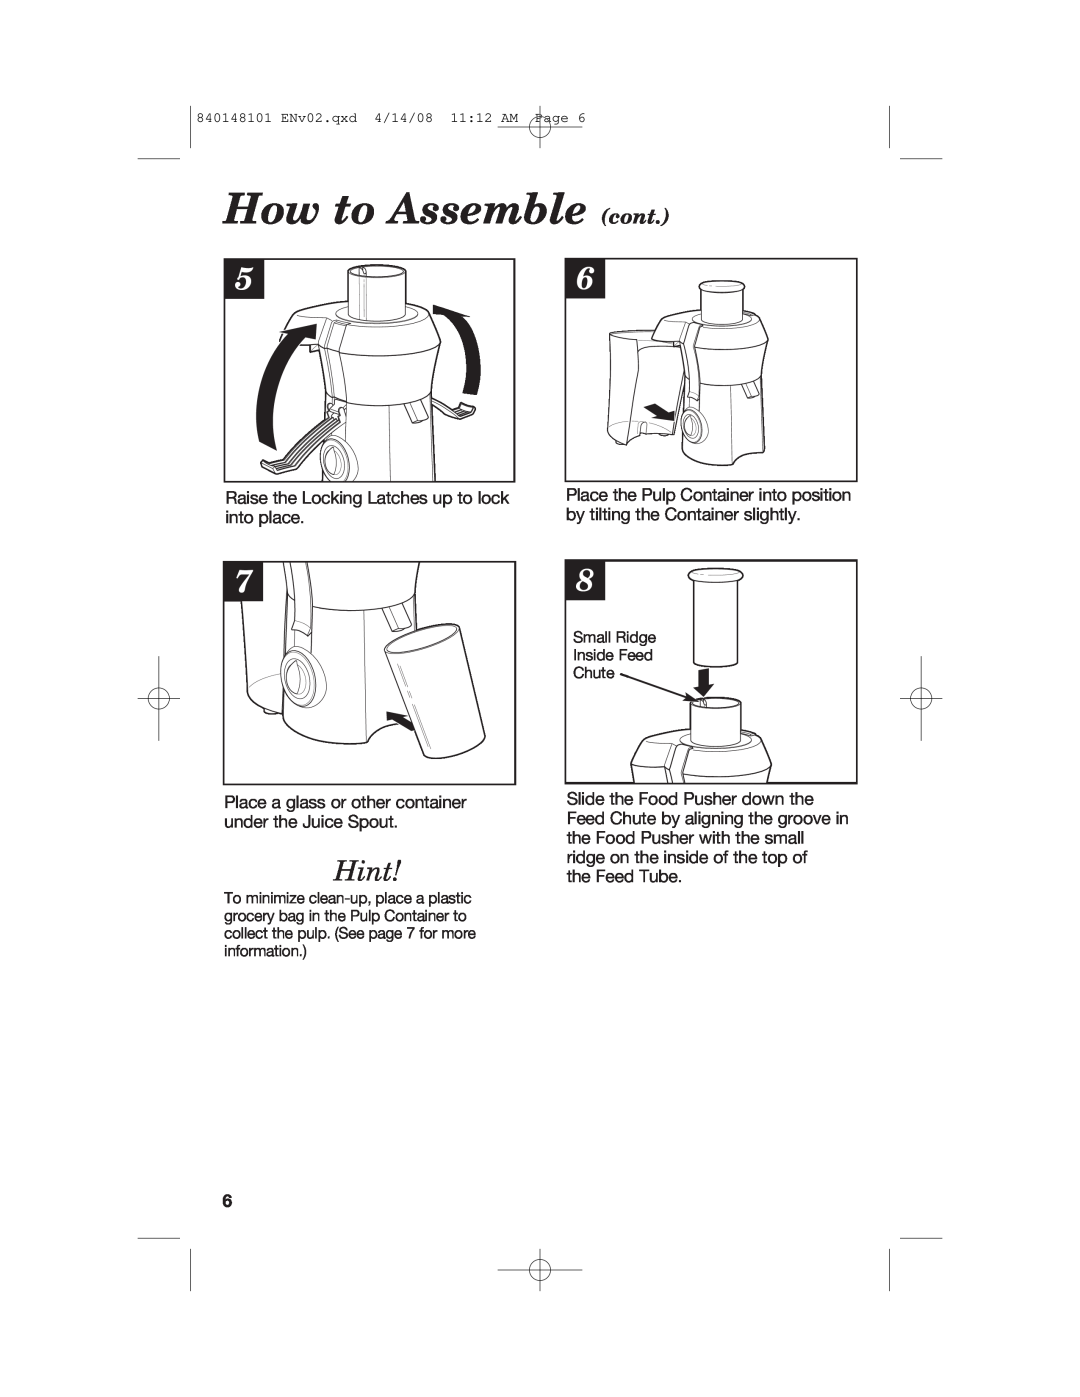 Hamilton Beach 840148101 manual How to Assemble cont, Hint 